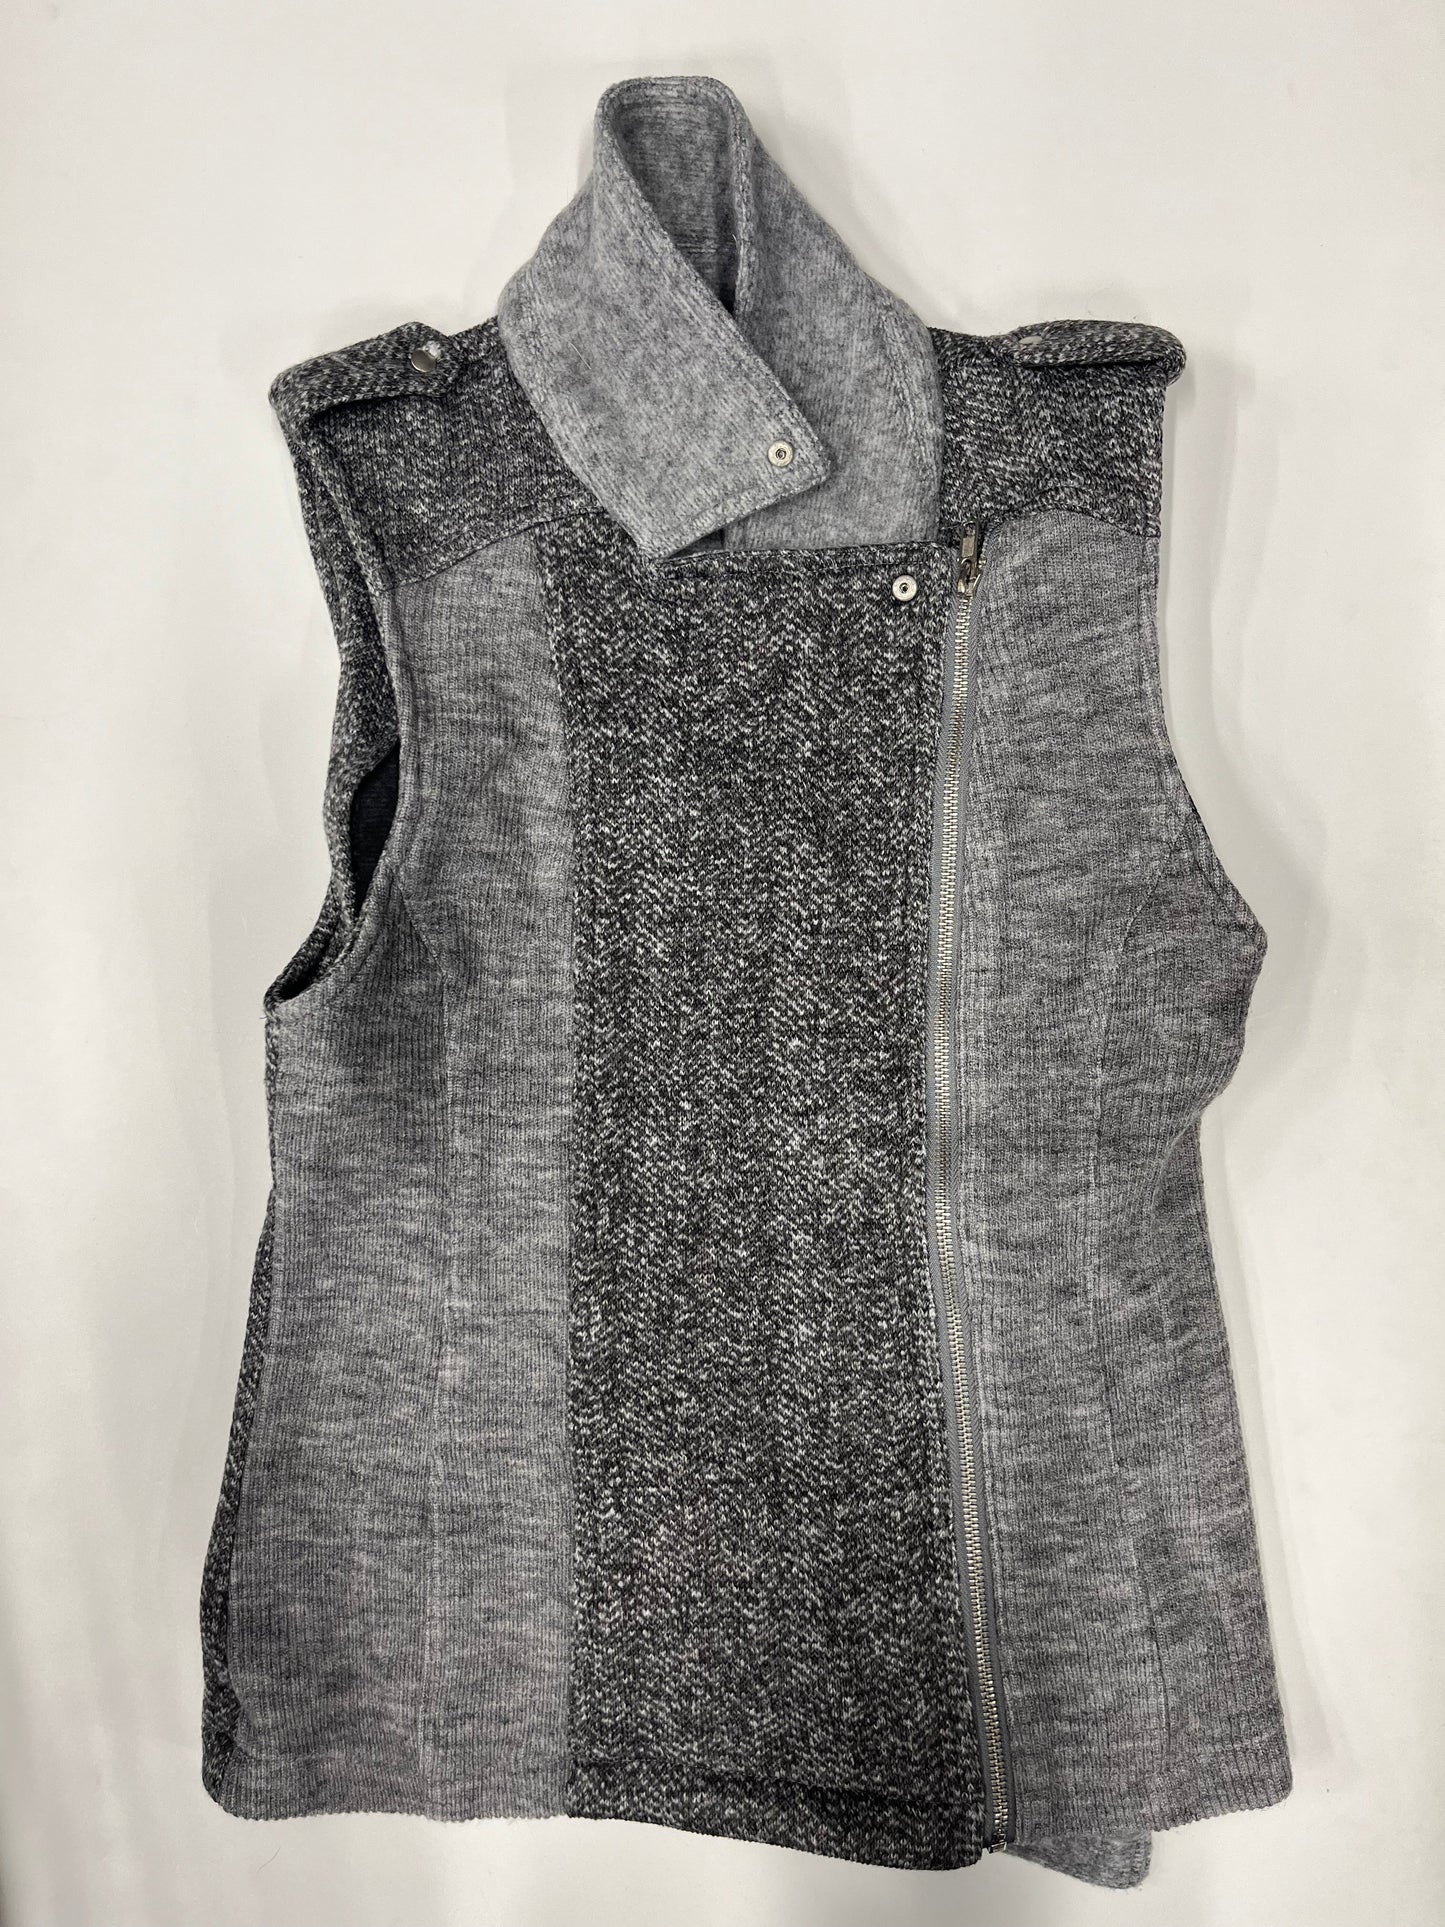 Vest By Hem & Thread  Size: S